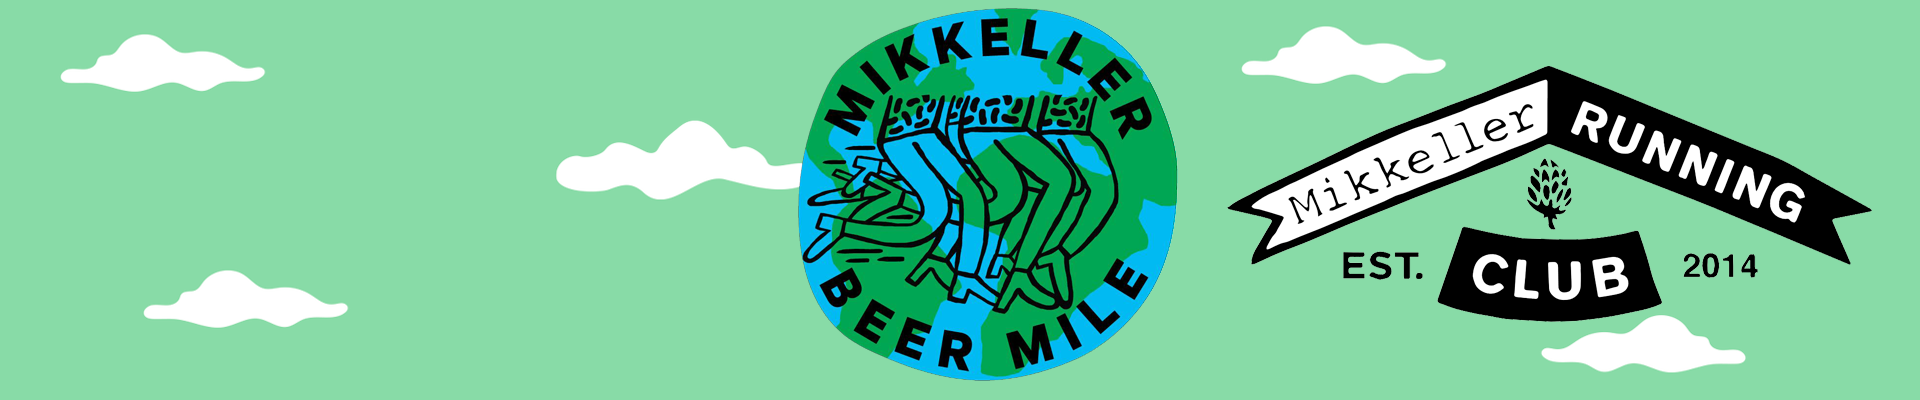 Mikkeller Beer Mile - Aabenraa